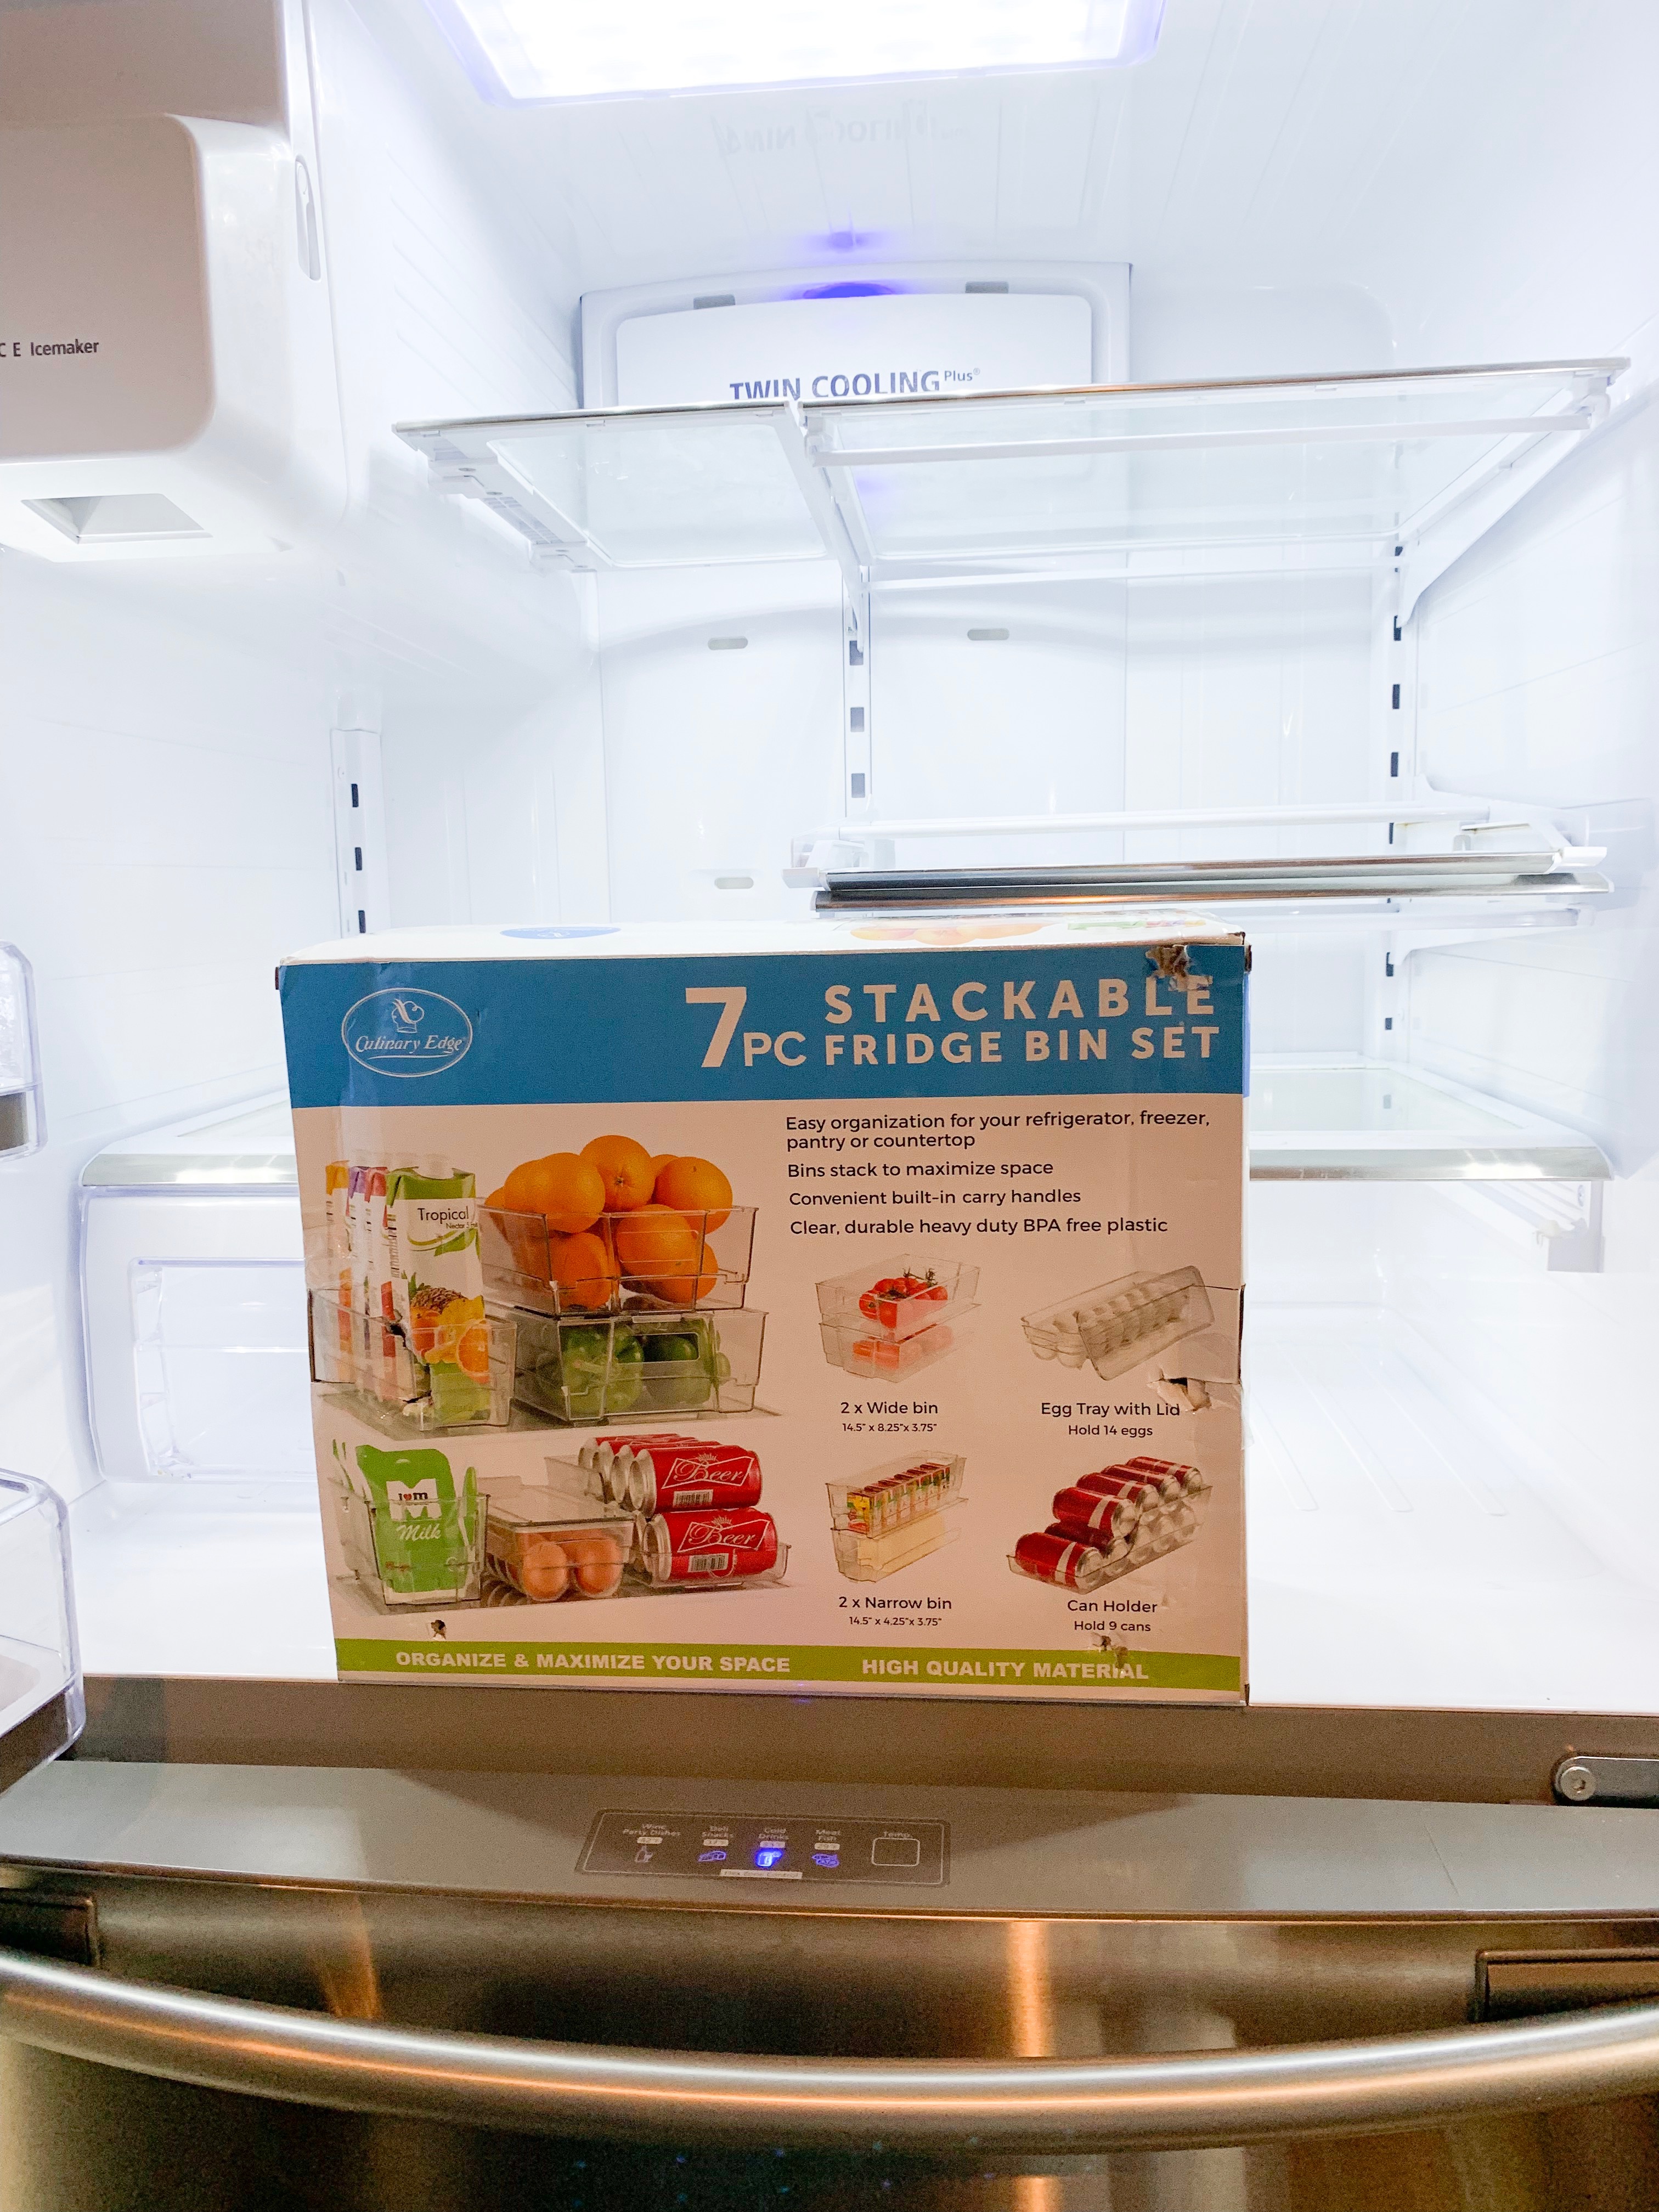 5 Tips For Organizing Your Refrigerator - Skinnytaste